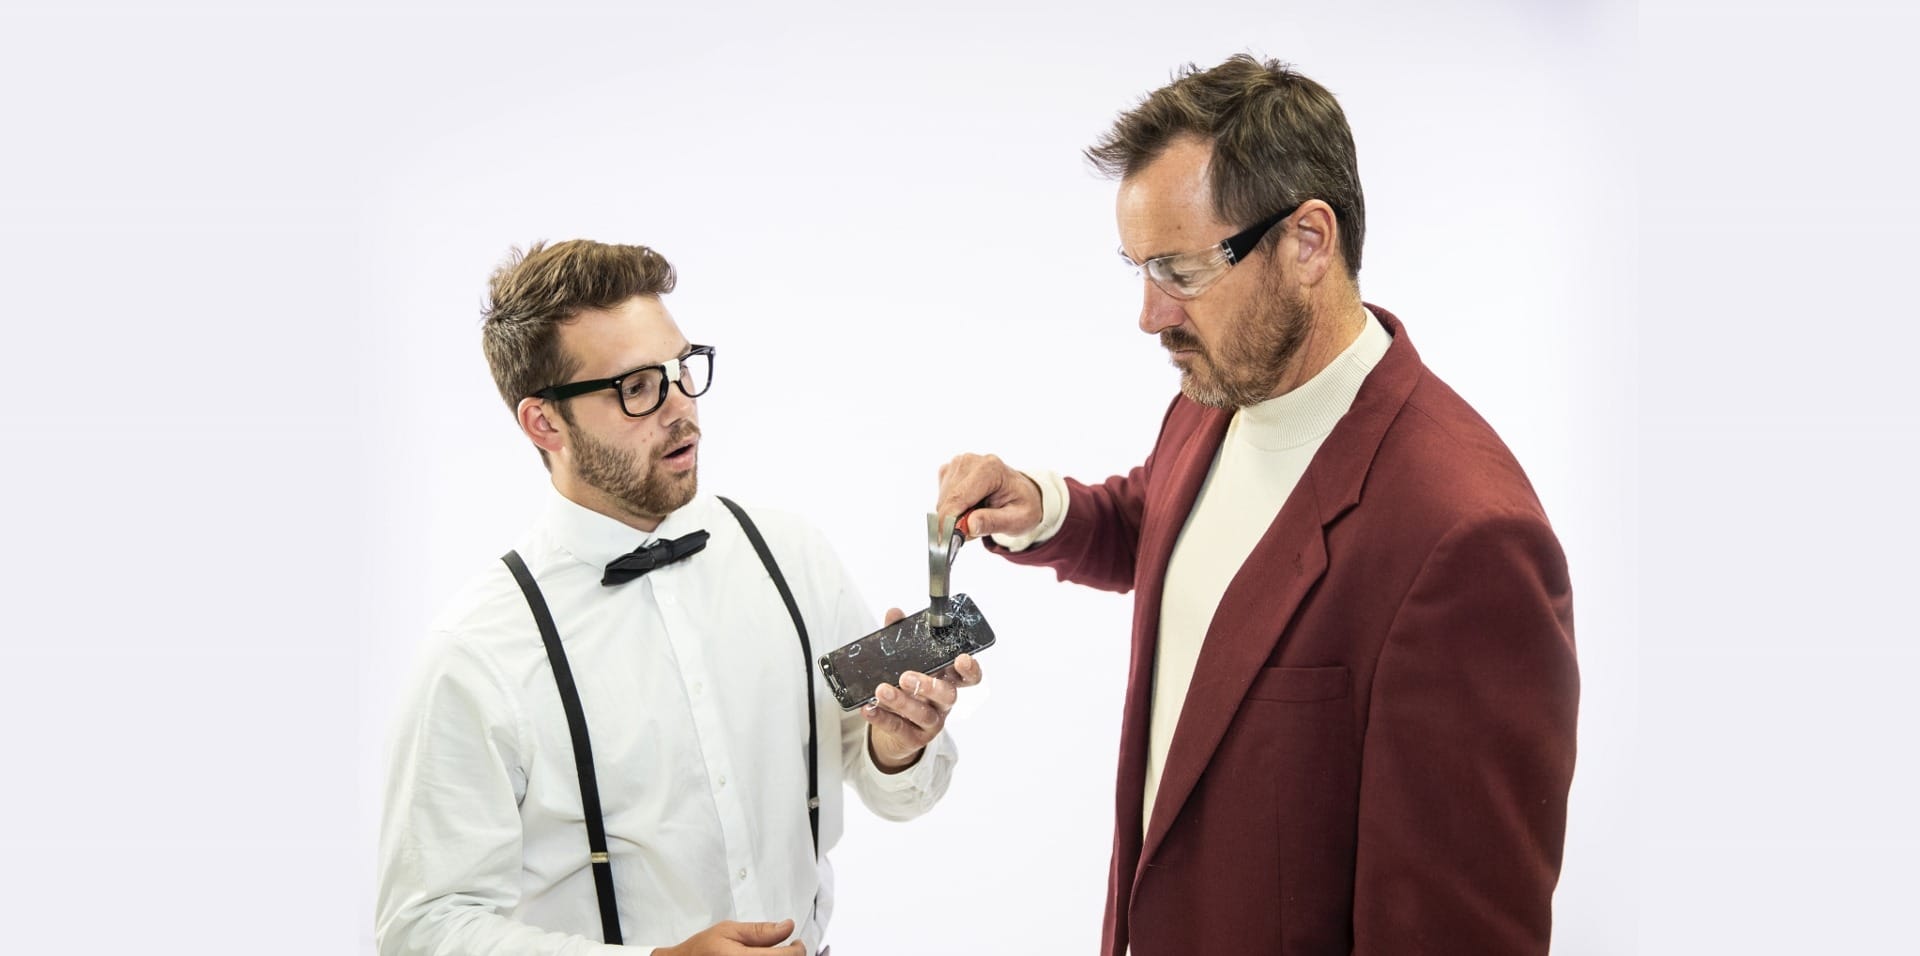 2 people inspecting broken mobile phone